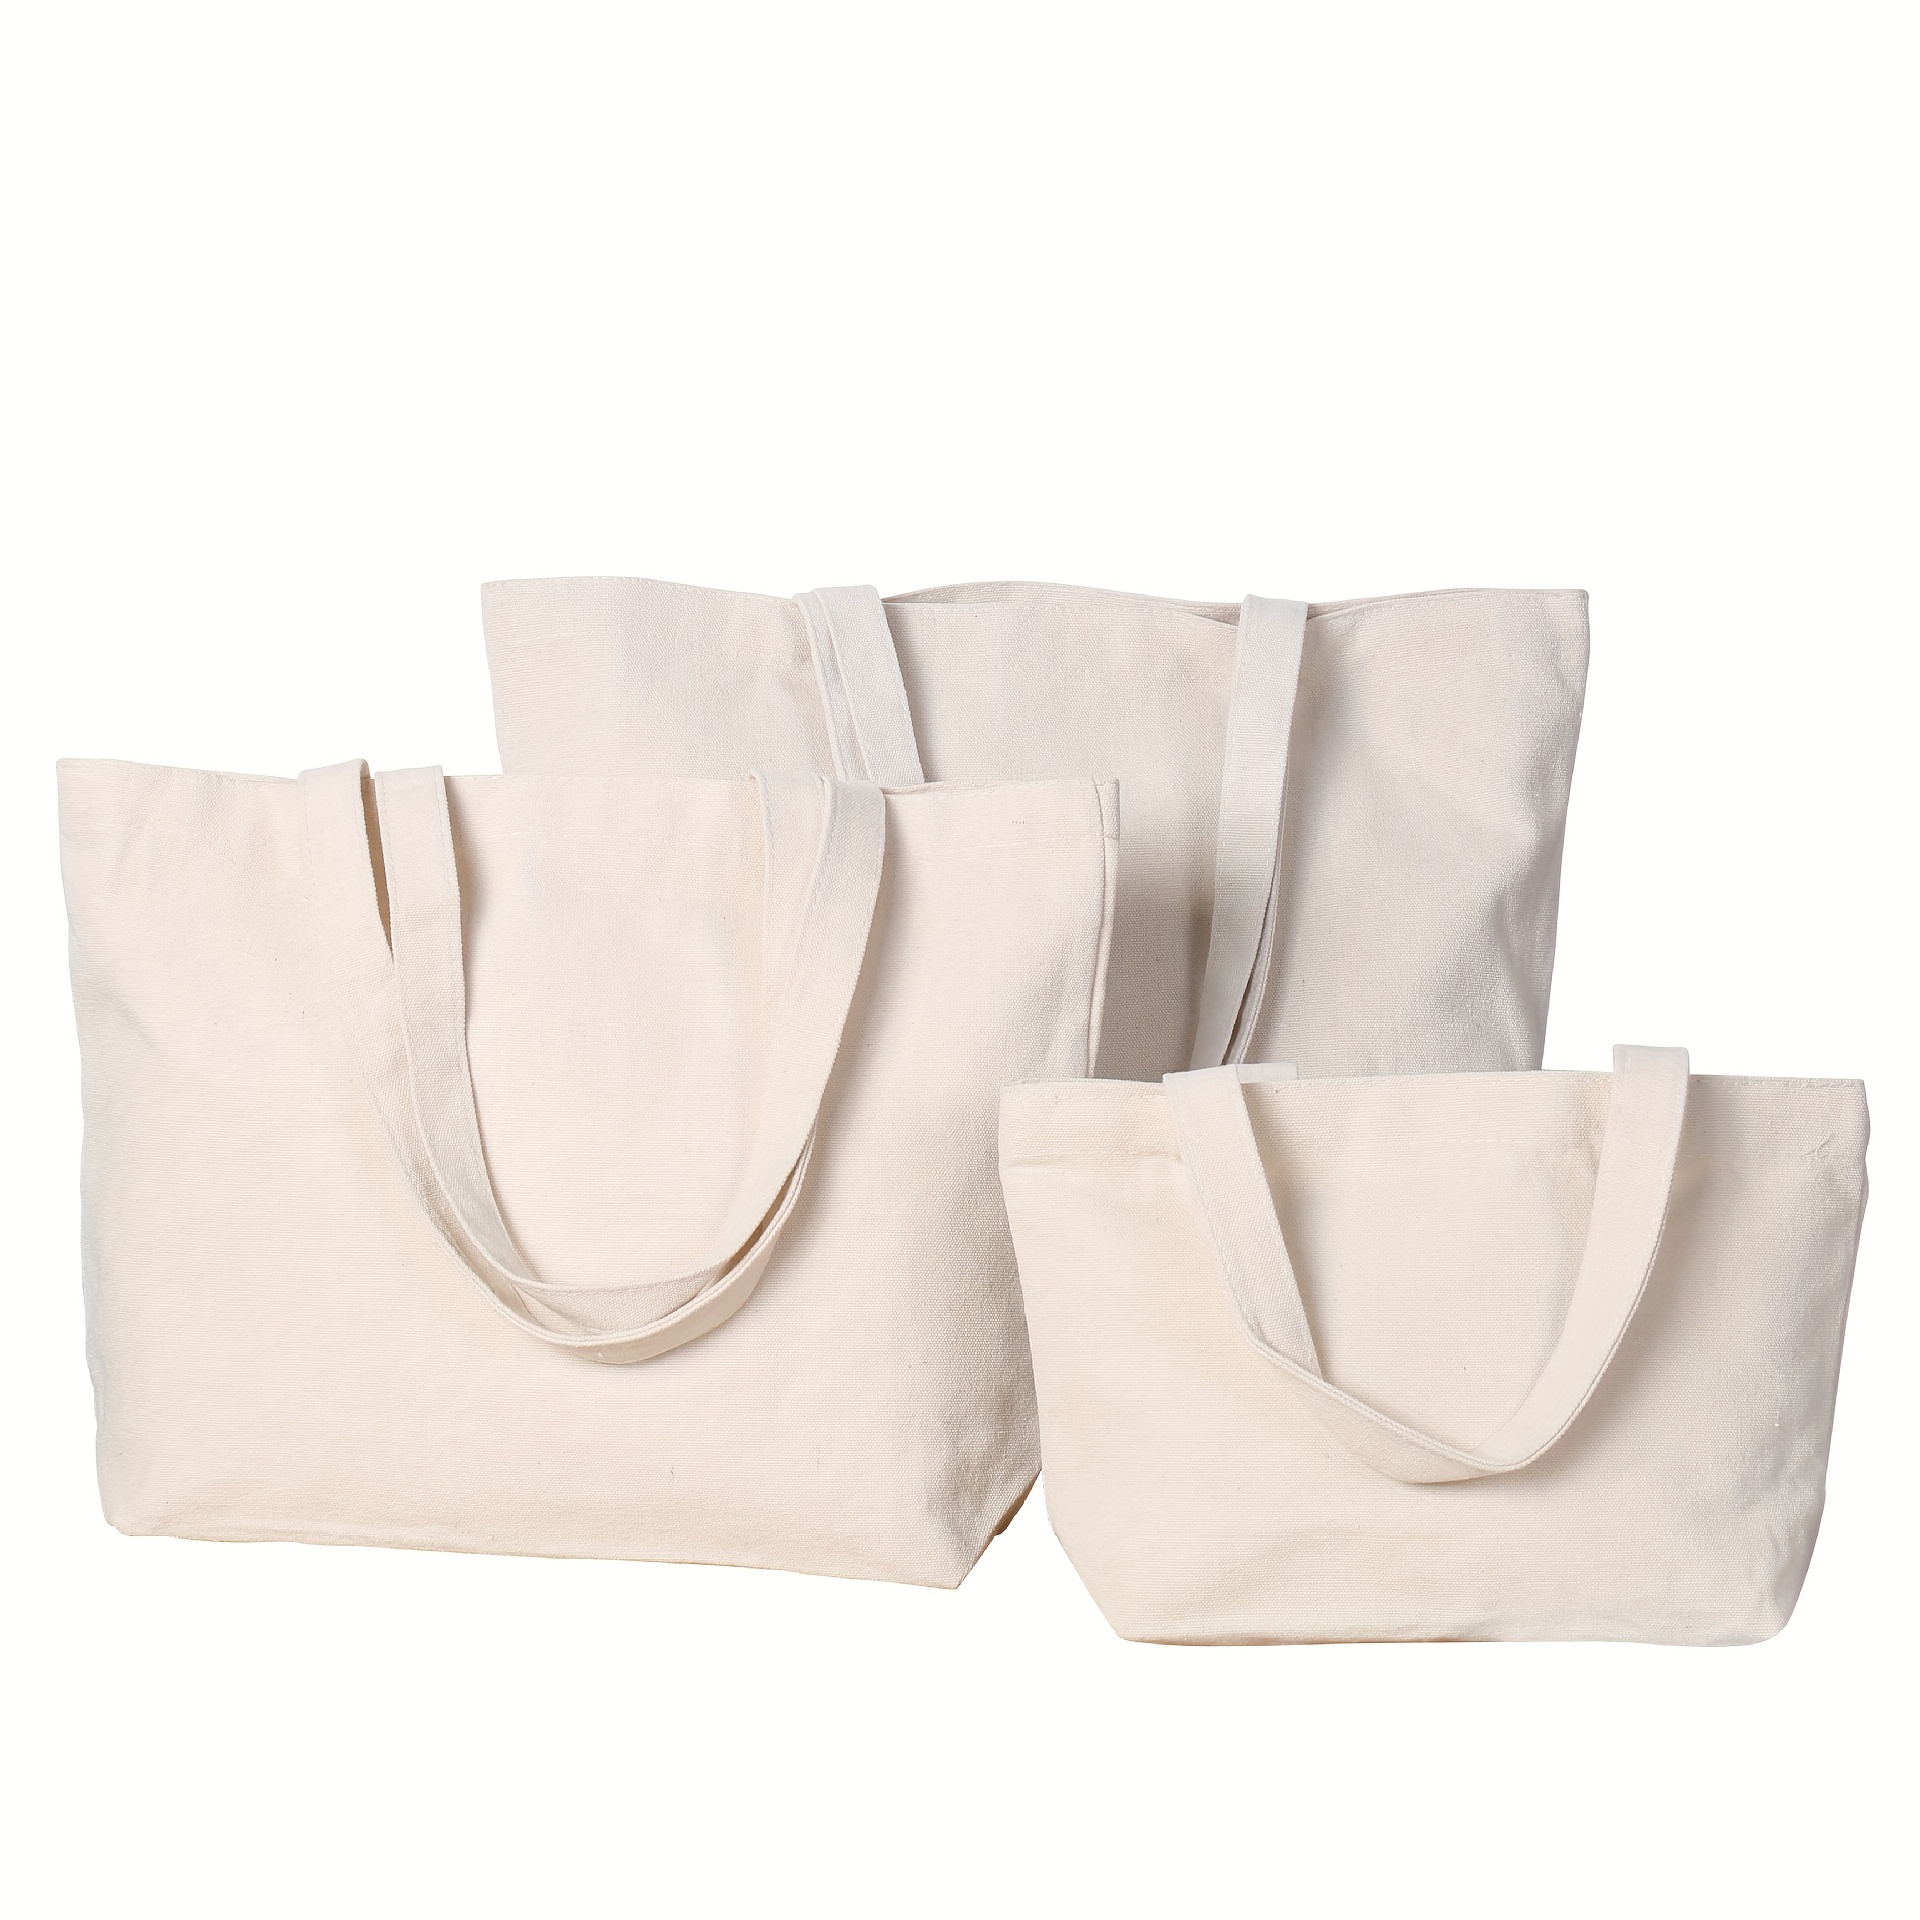 Canvas bag Tote bag Environmental protection Can buy a blank bag